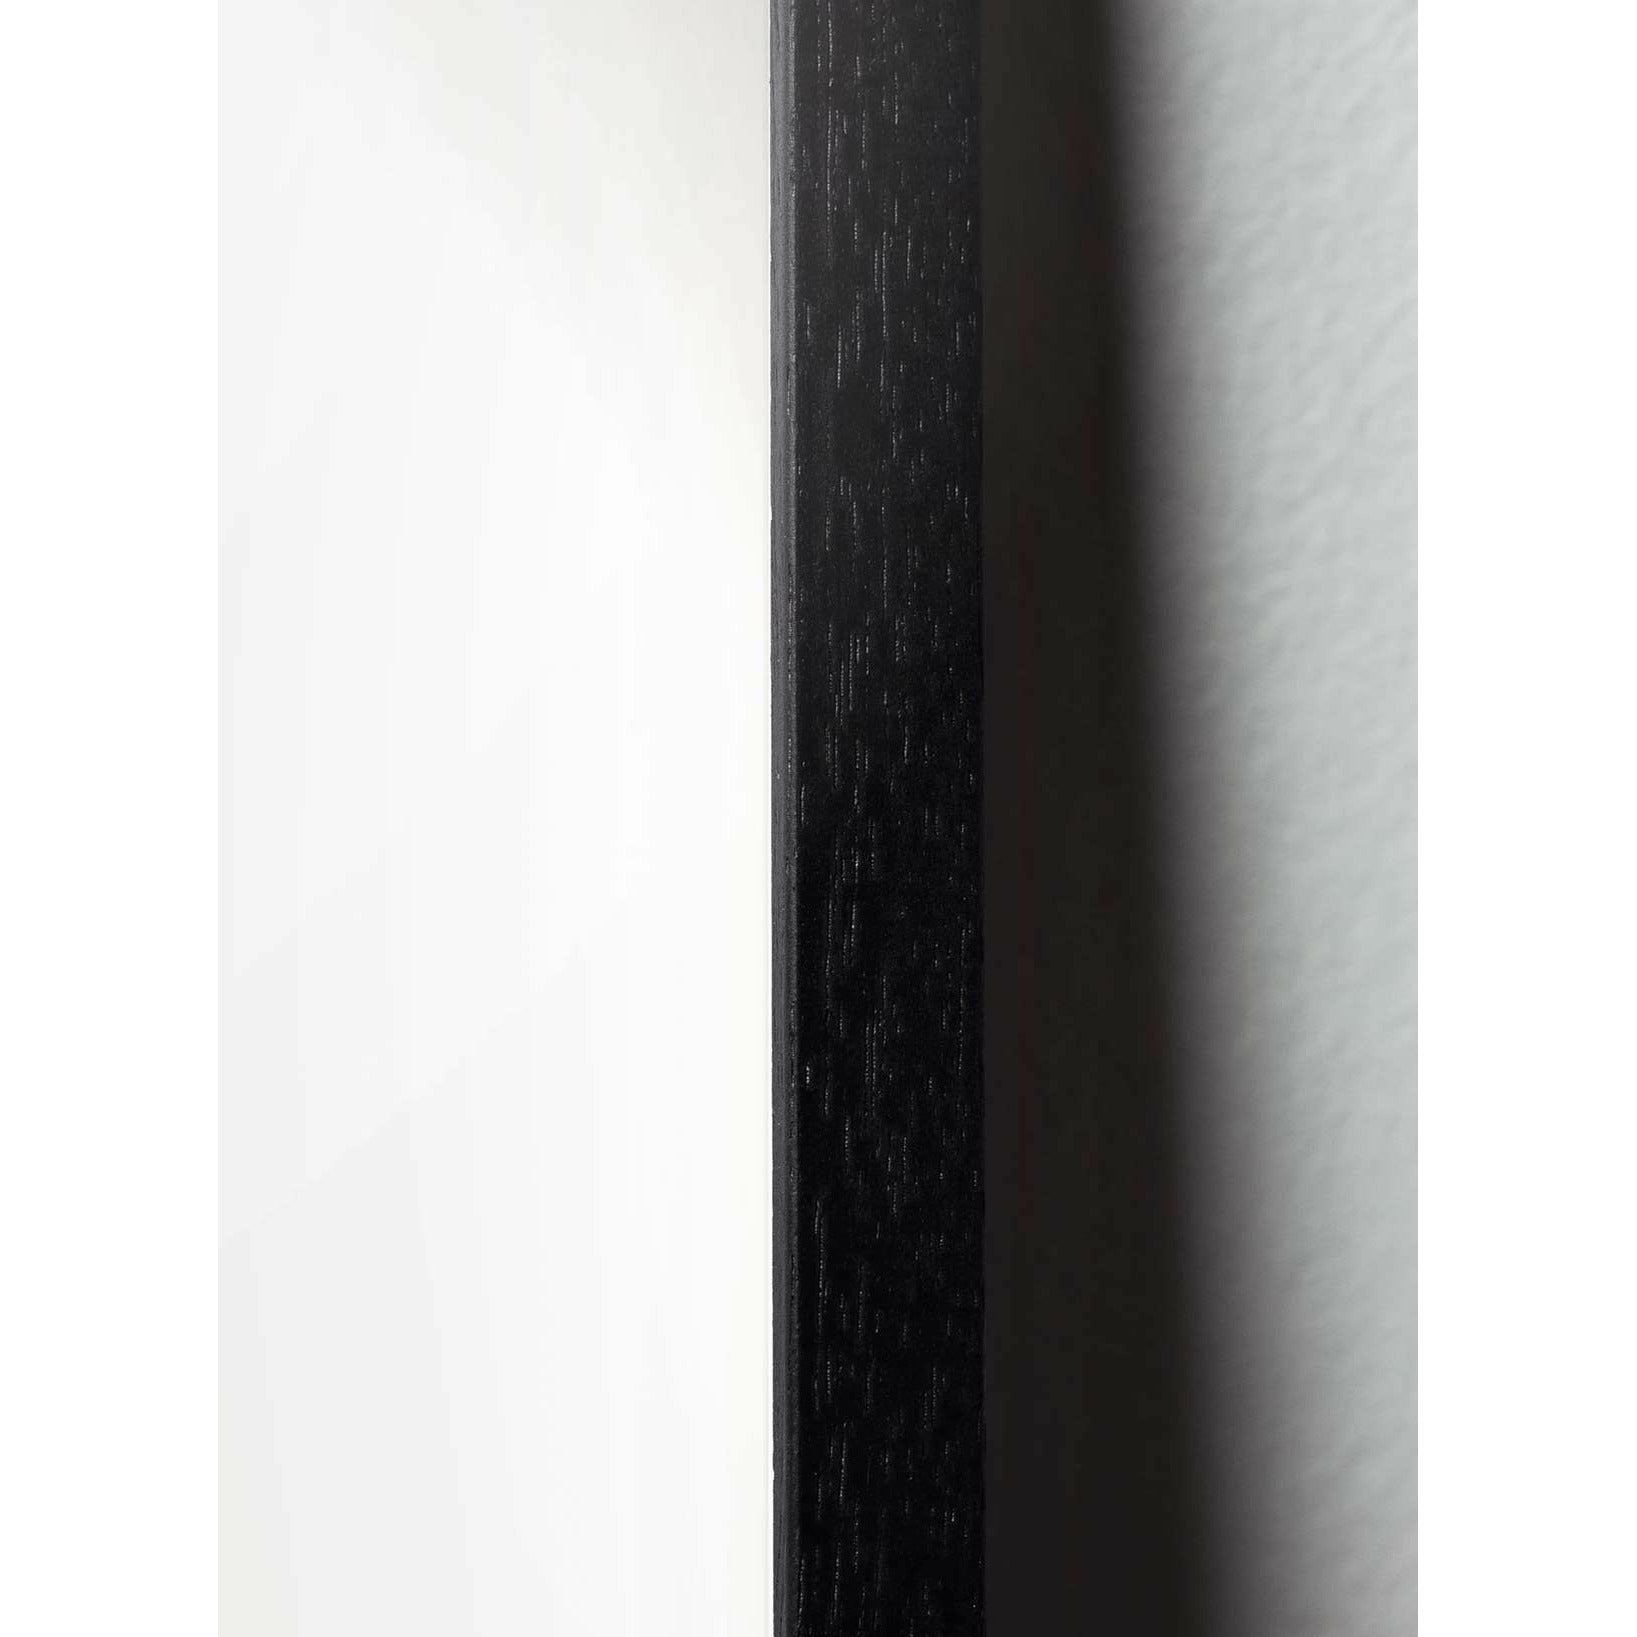 Brainchild Vintergästdesignikonsaffisch, ram i svart målade trä A5, grå